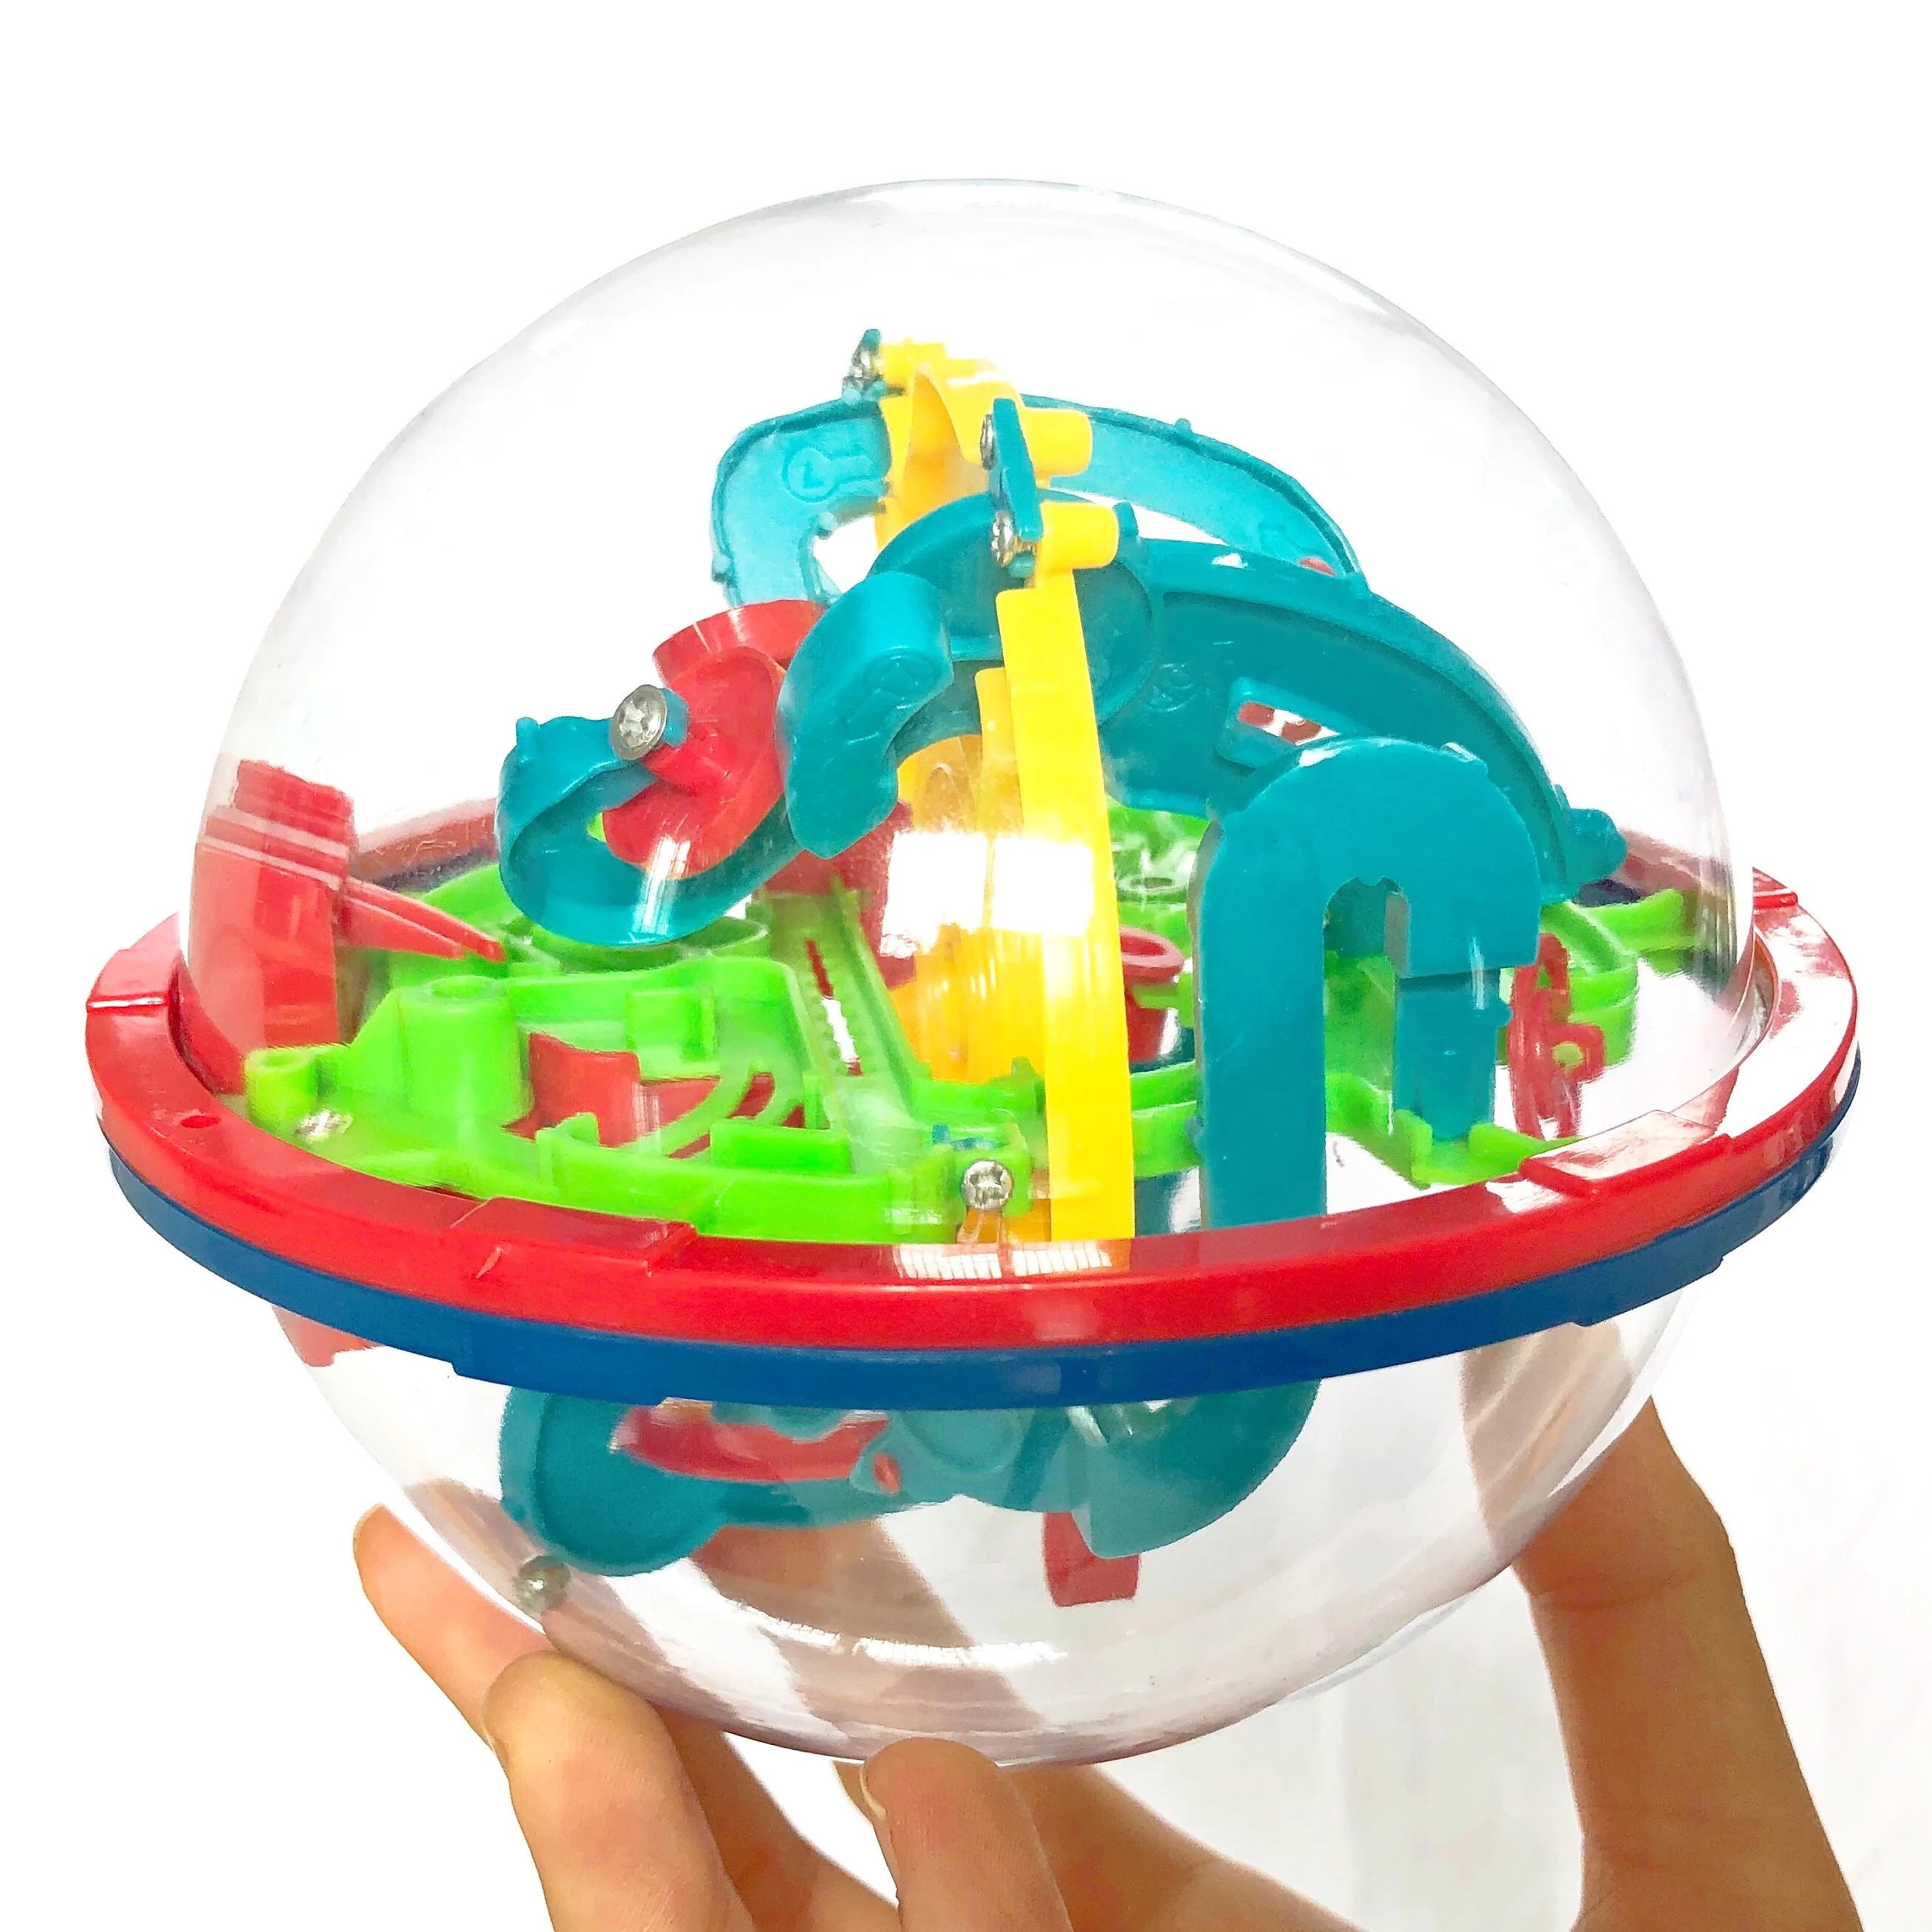 3D Intellect Labyrinth Ball Maze Puzzle Brain Teaser Game Kids Toys LS 